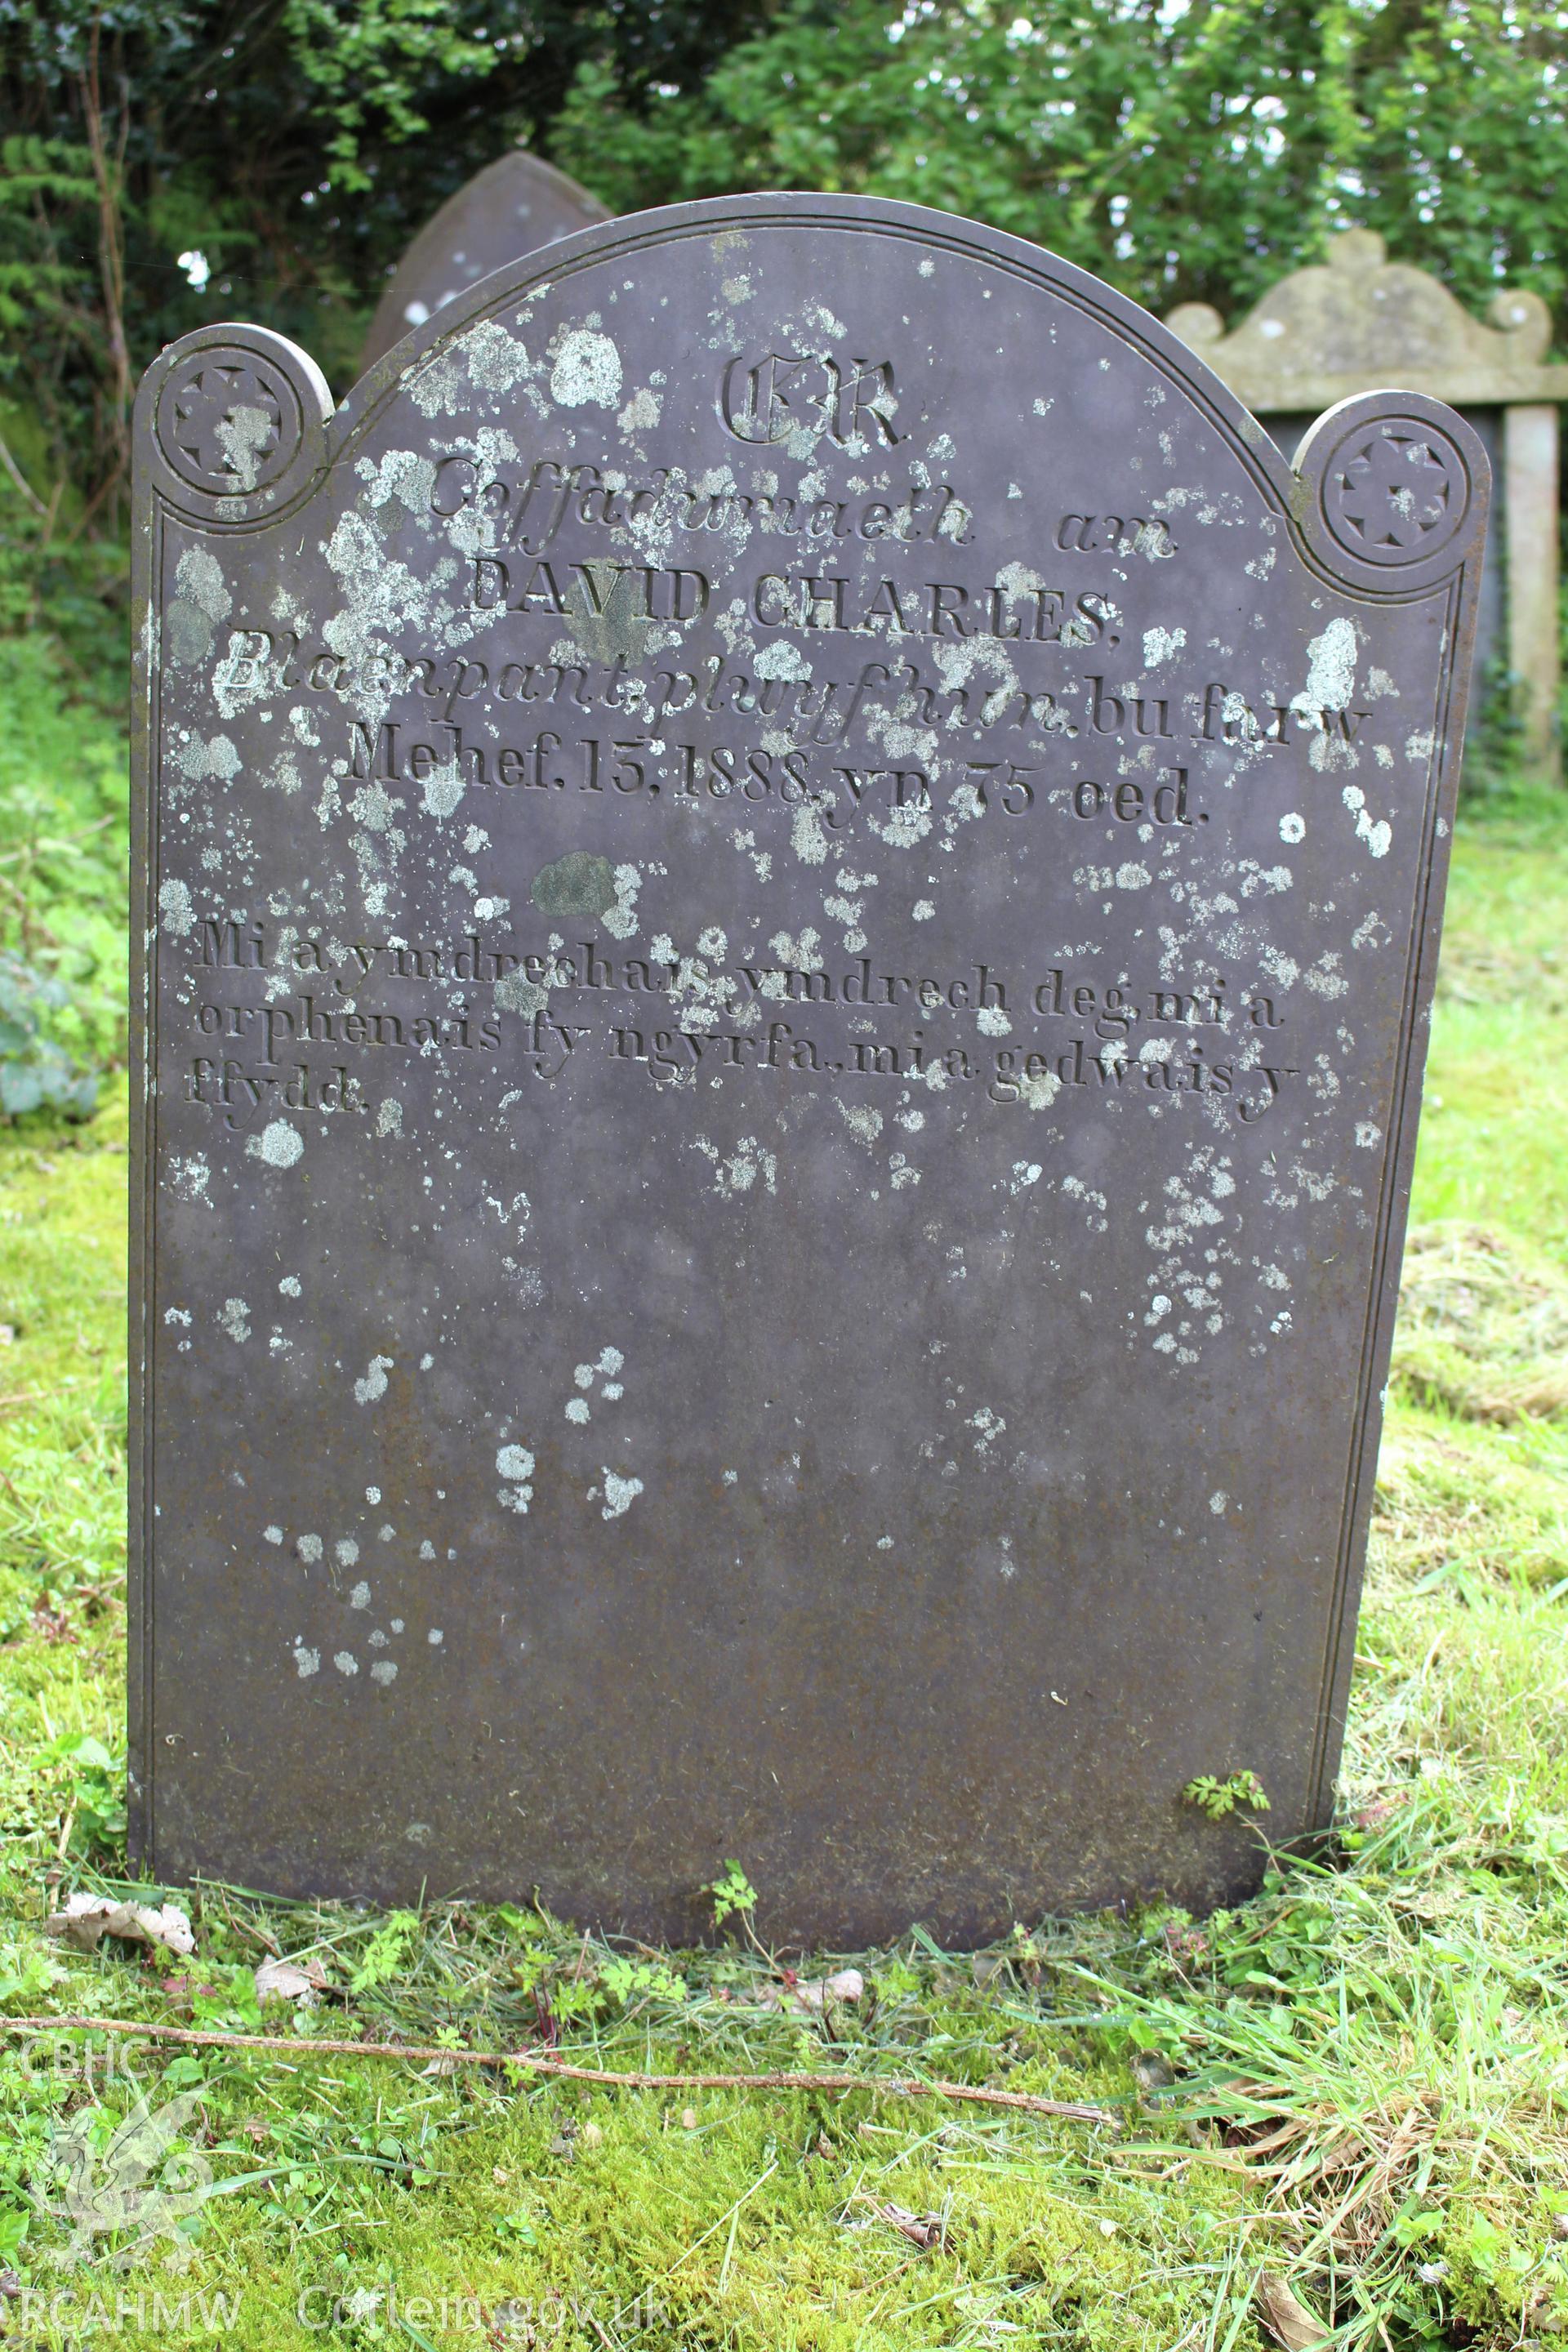 Gravestone of David Charles